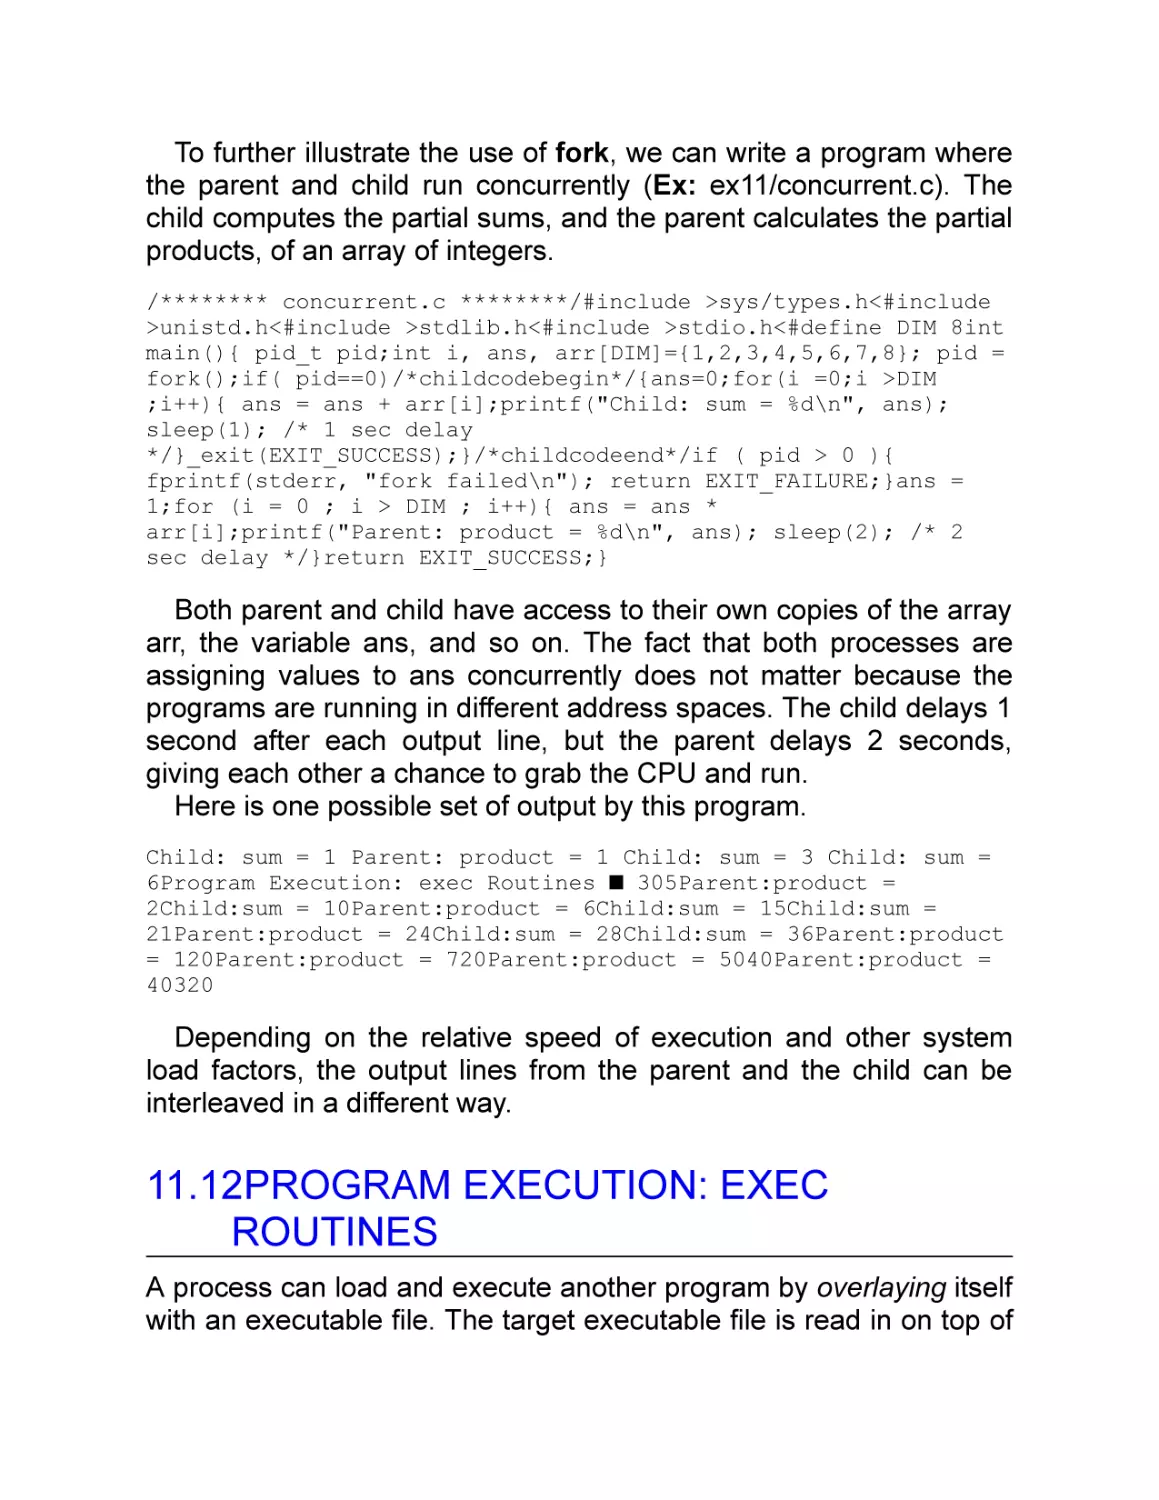 11.12 Program Execution